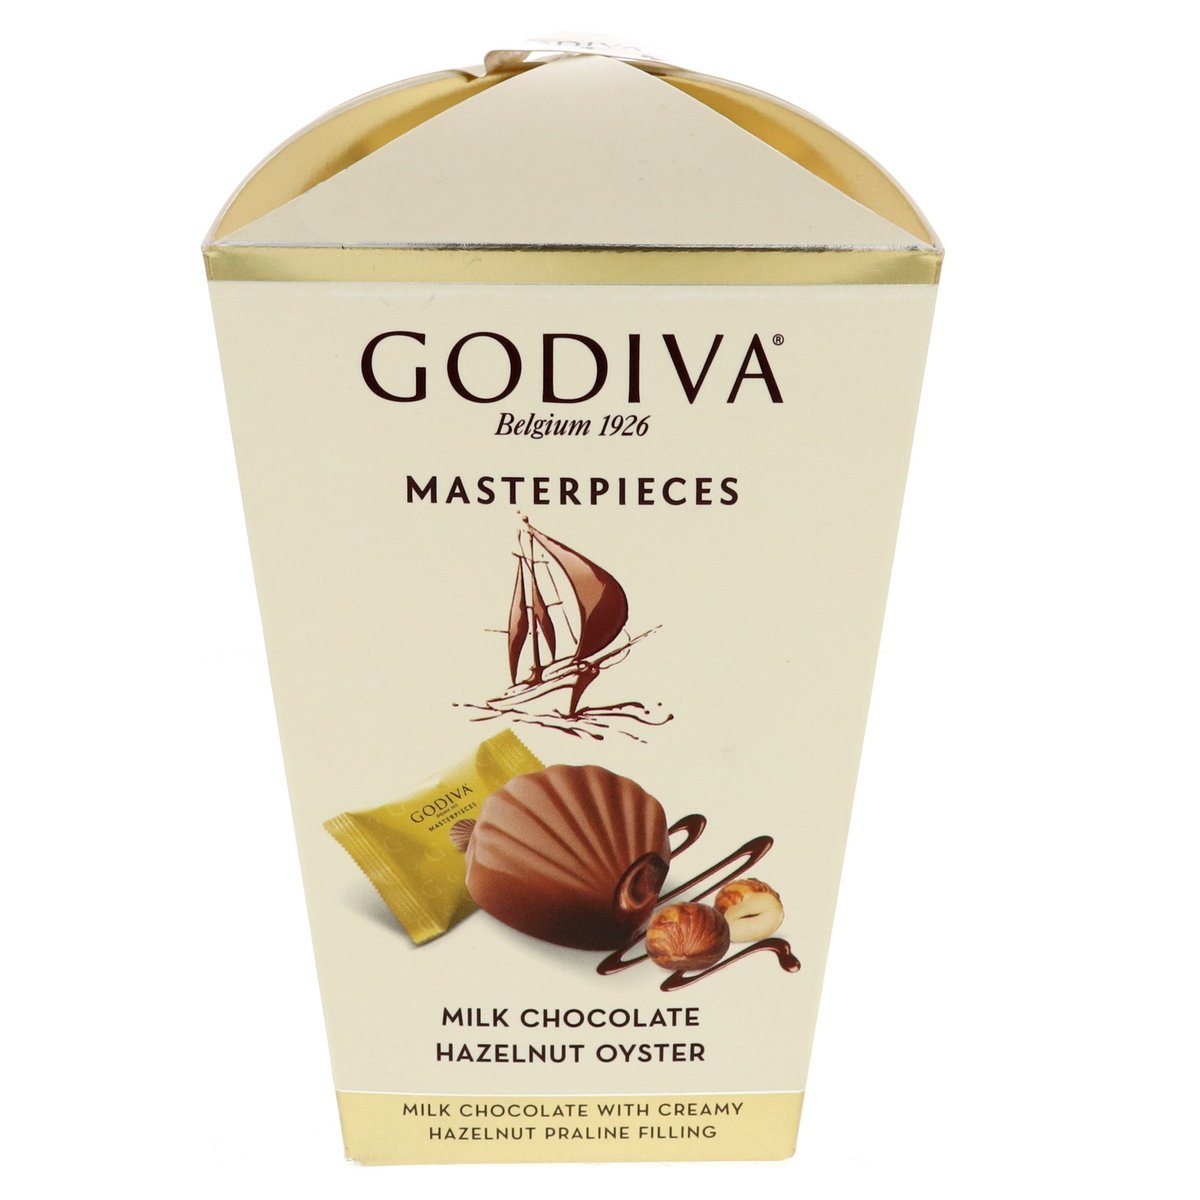 Godiva Master Pieces Milk Chocolate With Hazelnut Oyster 117 g